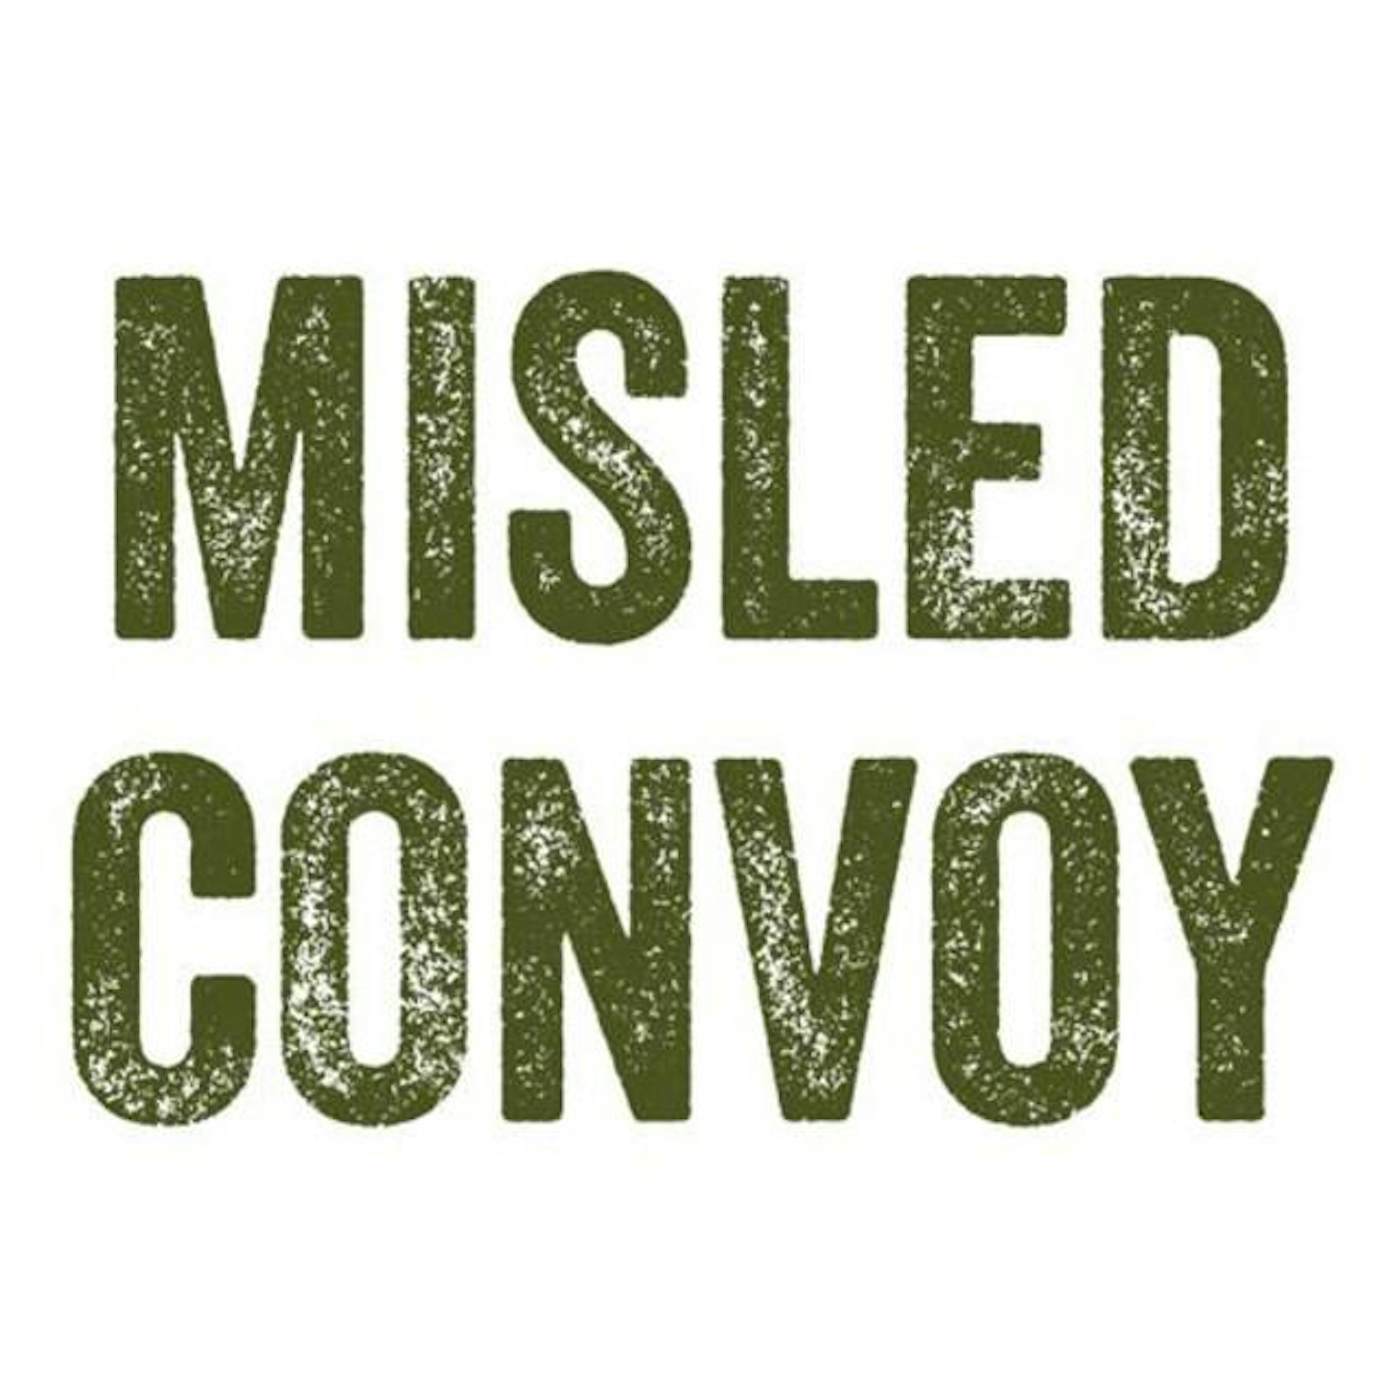 Misled Convoy